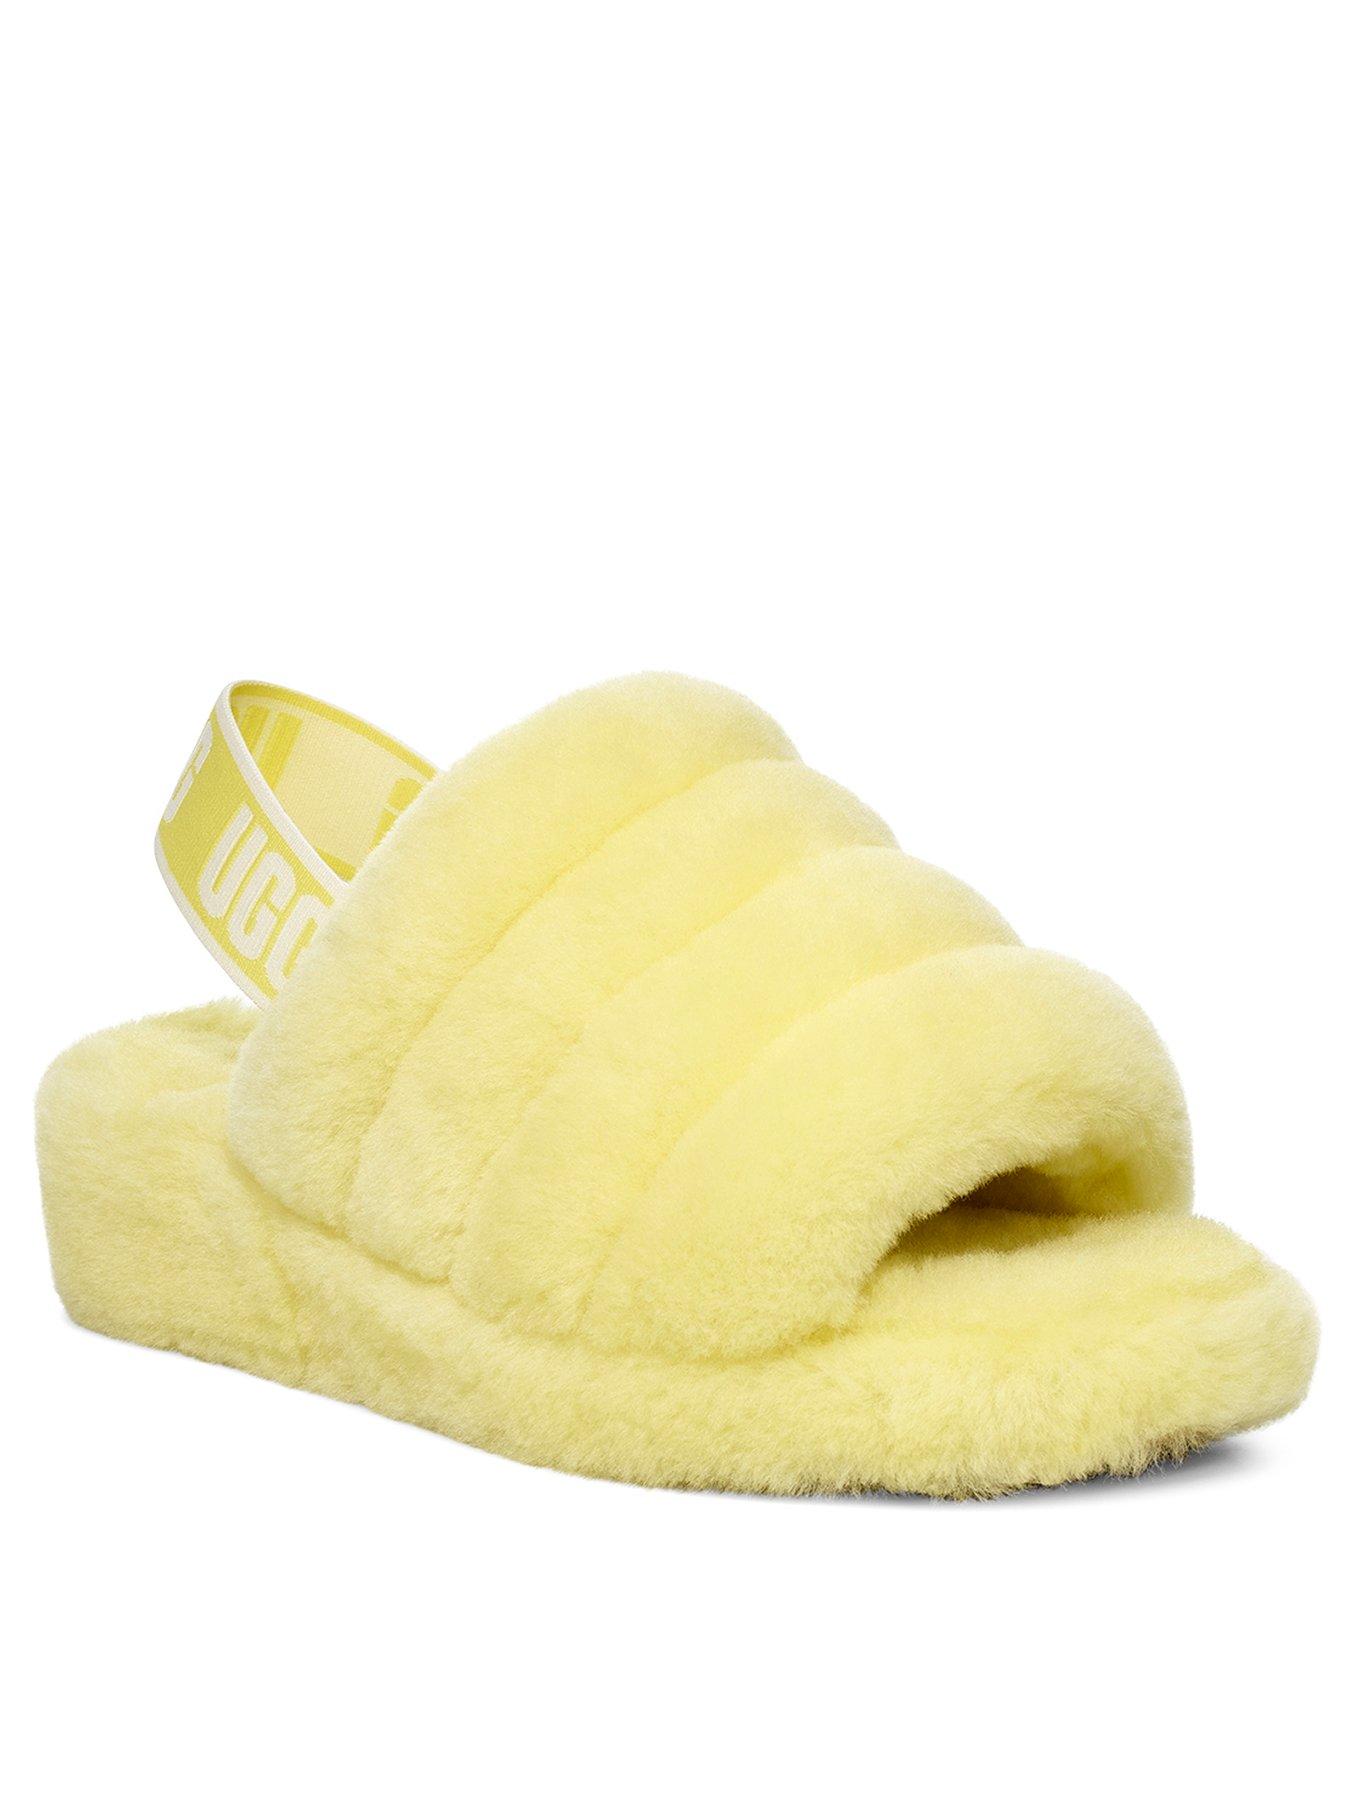 ugg slippers yellow